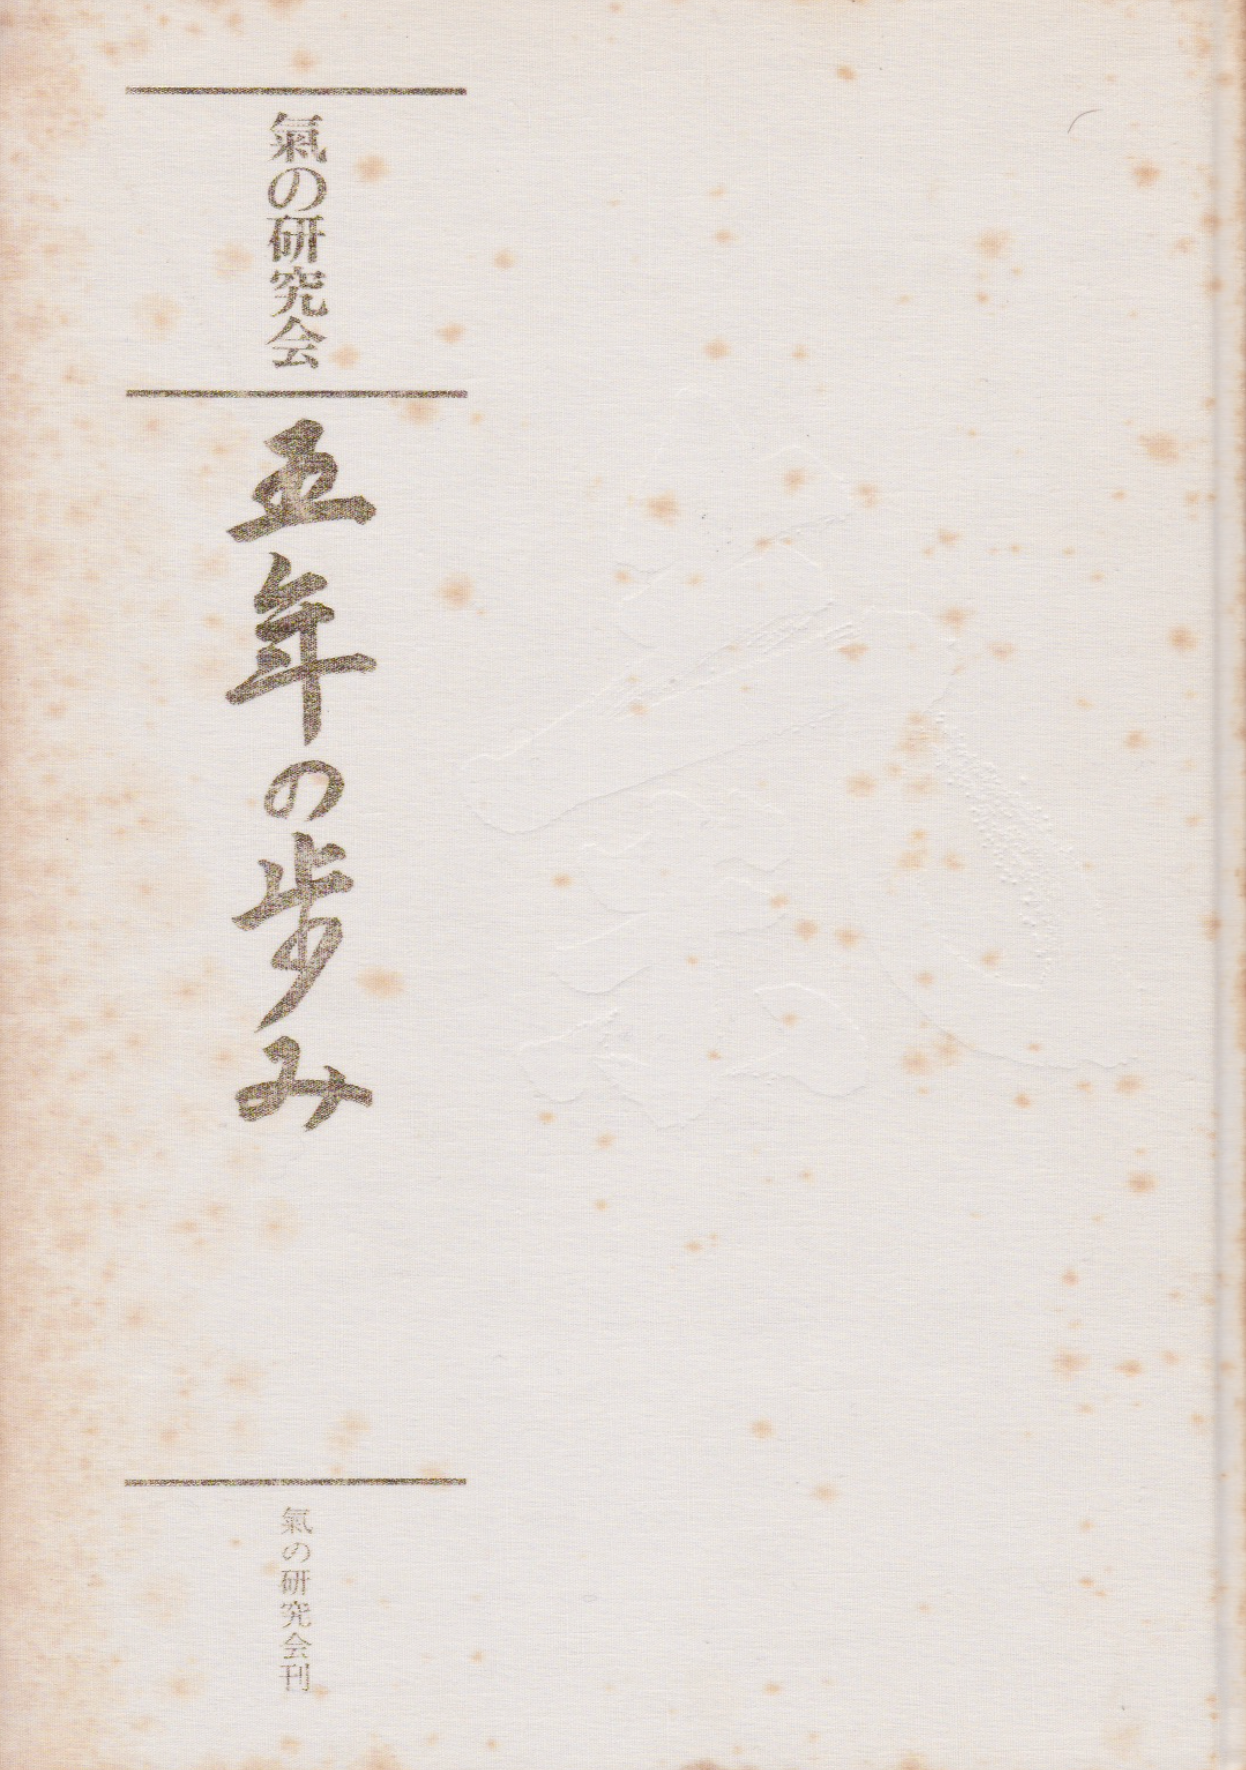 Ki Society 5th Year Anniversary Book by Koichi Tohei (Preowned) - Budovideos Inc